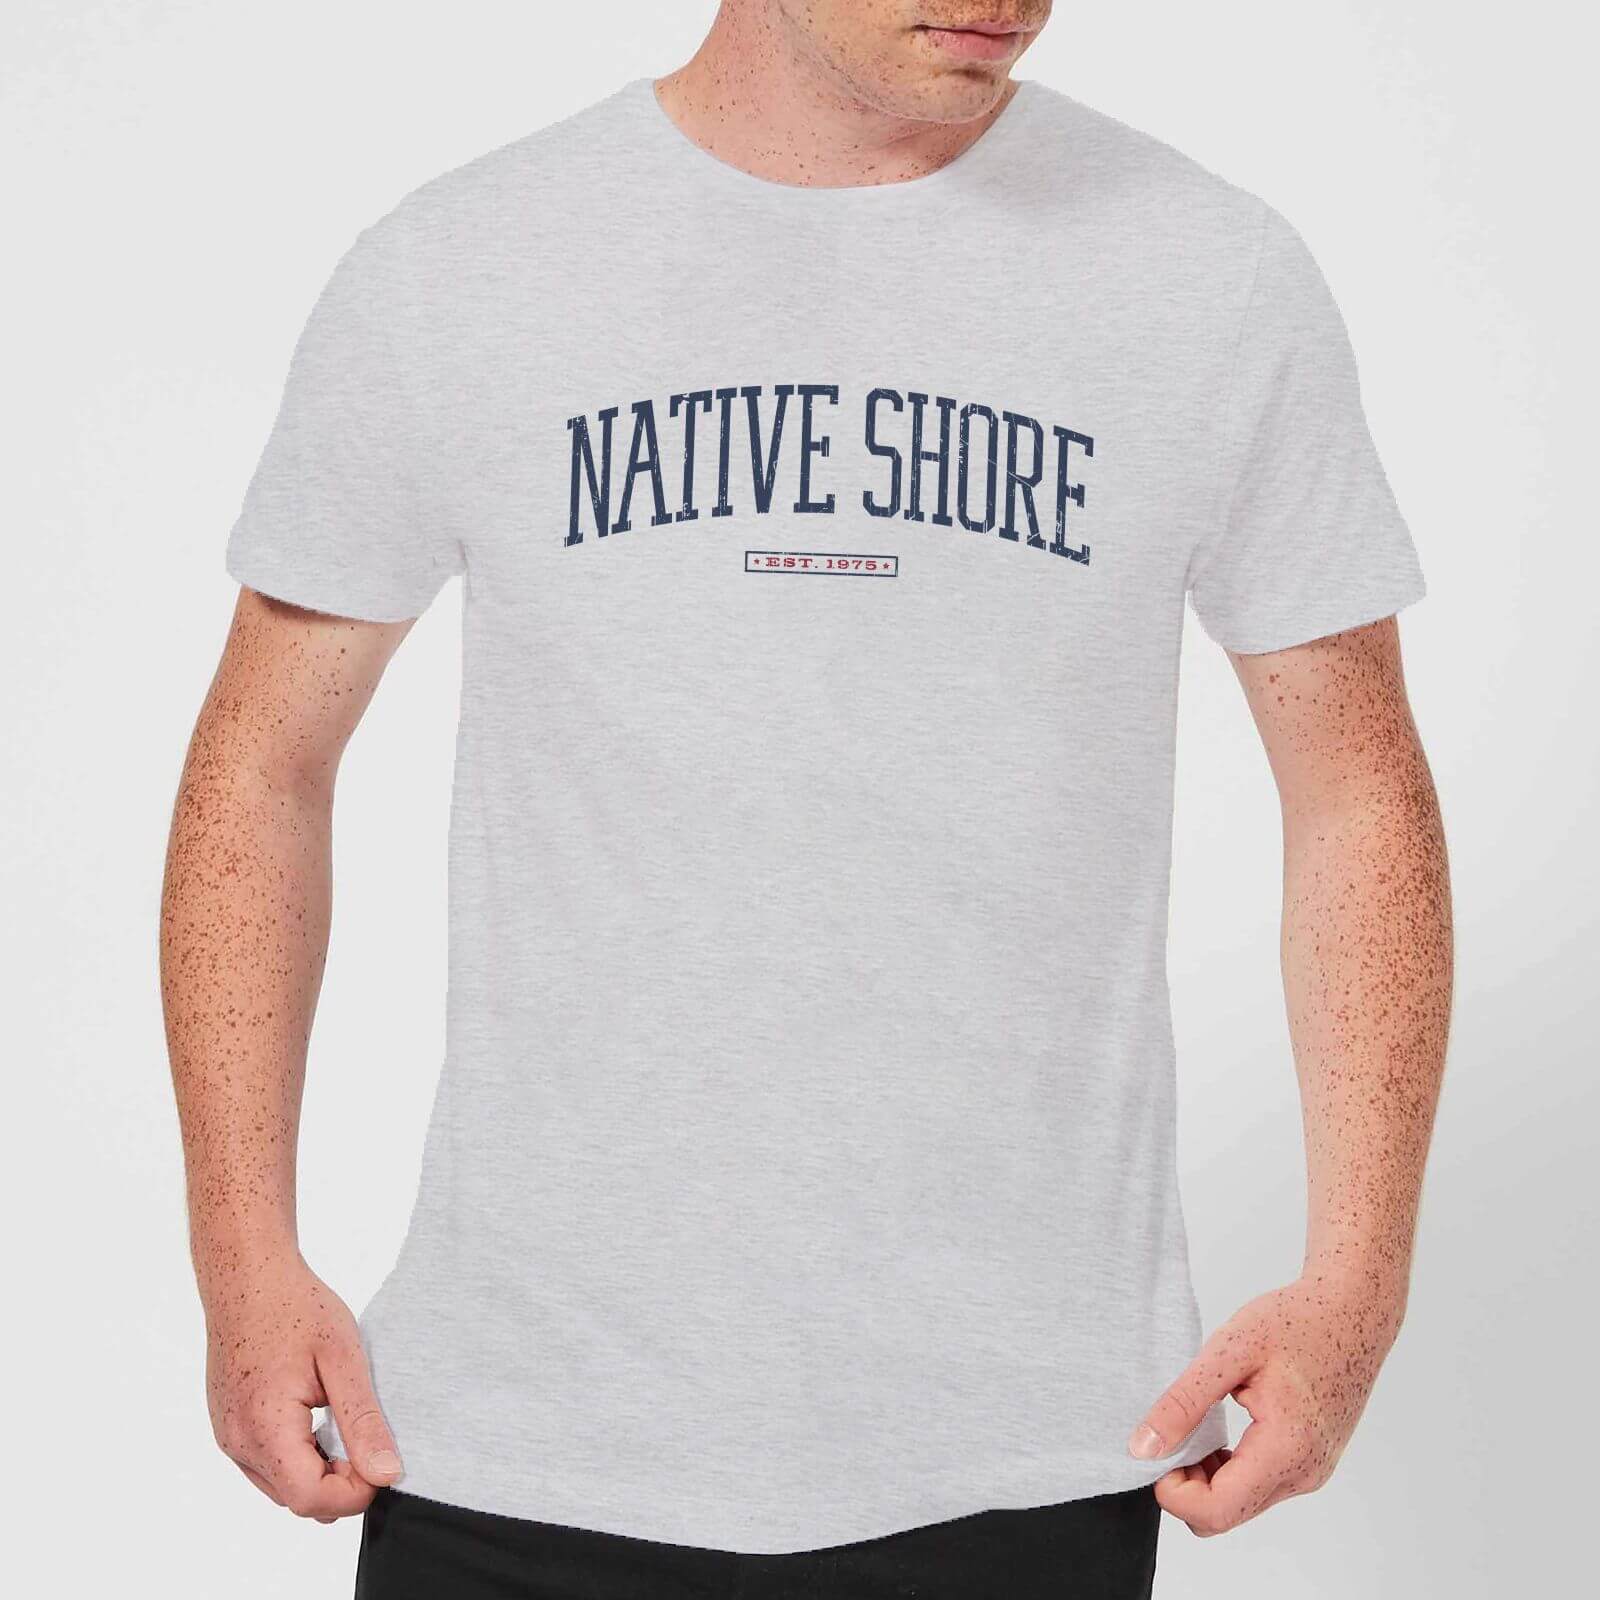 Native Shore Varsity Curved Men's T-Shirt - Grey - 3XL - Grey